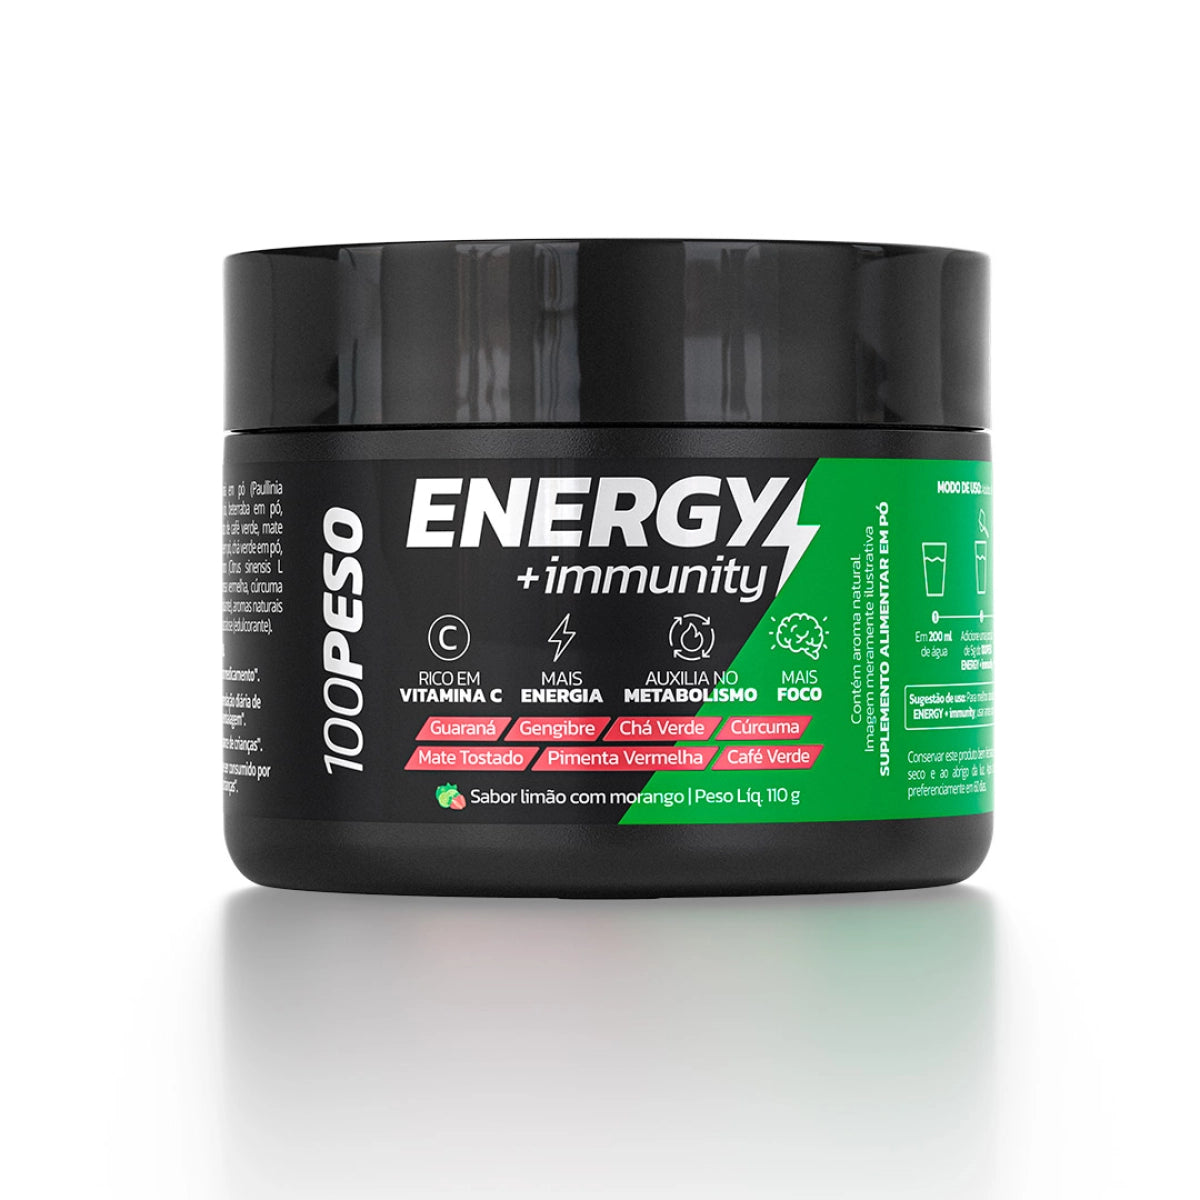 Energy + Immunity 110g - Lemon with Strawberry flavour